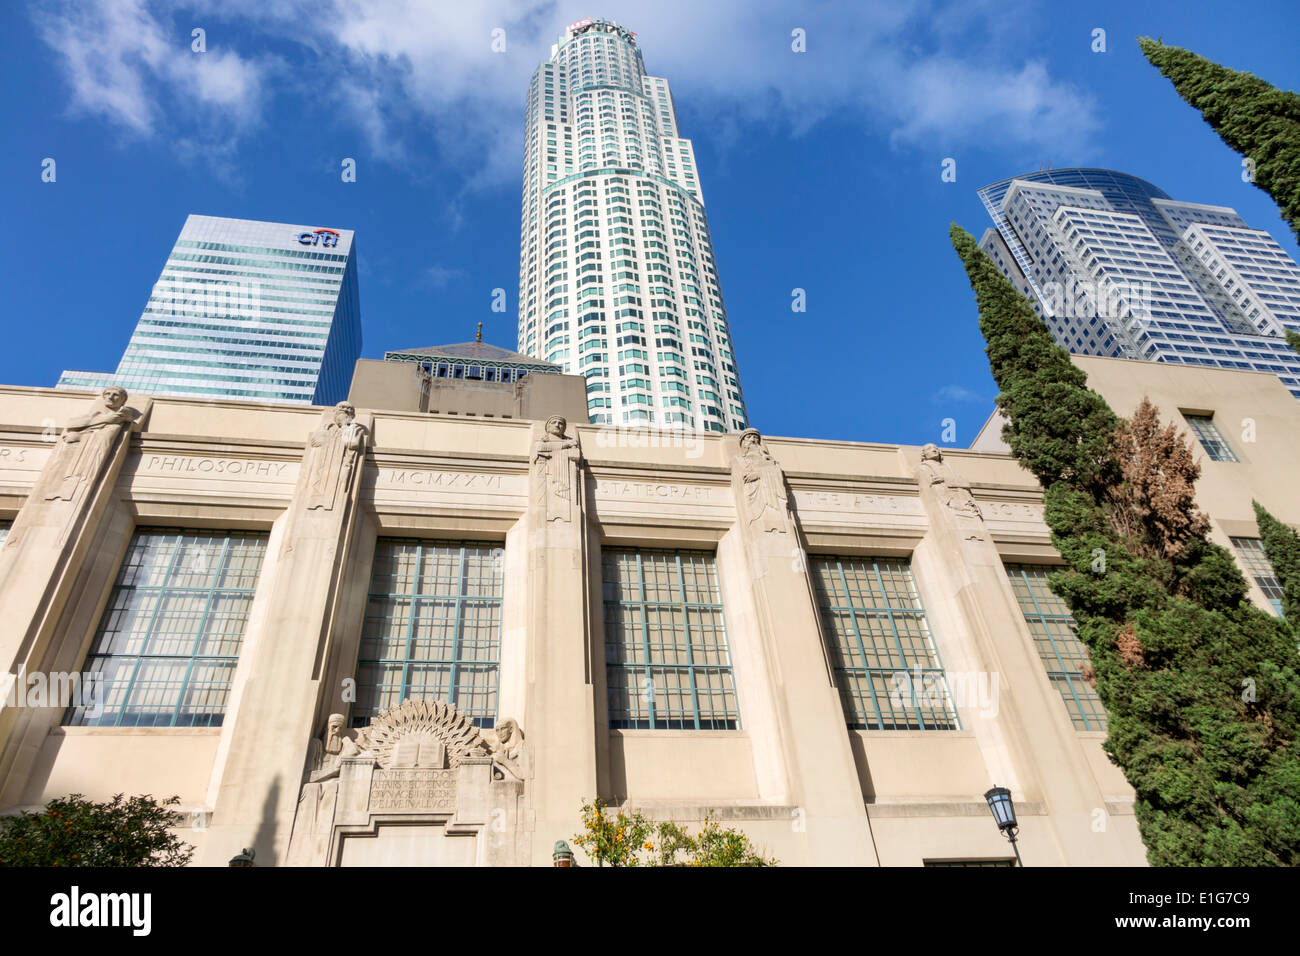 Los Angeles California, Downtown, Skyline der Stadt, Los Angeles Public Library, Richard J. Riordan Central Library, Goodhue Building, 1926, südseiteantikes Egy Stockfoto